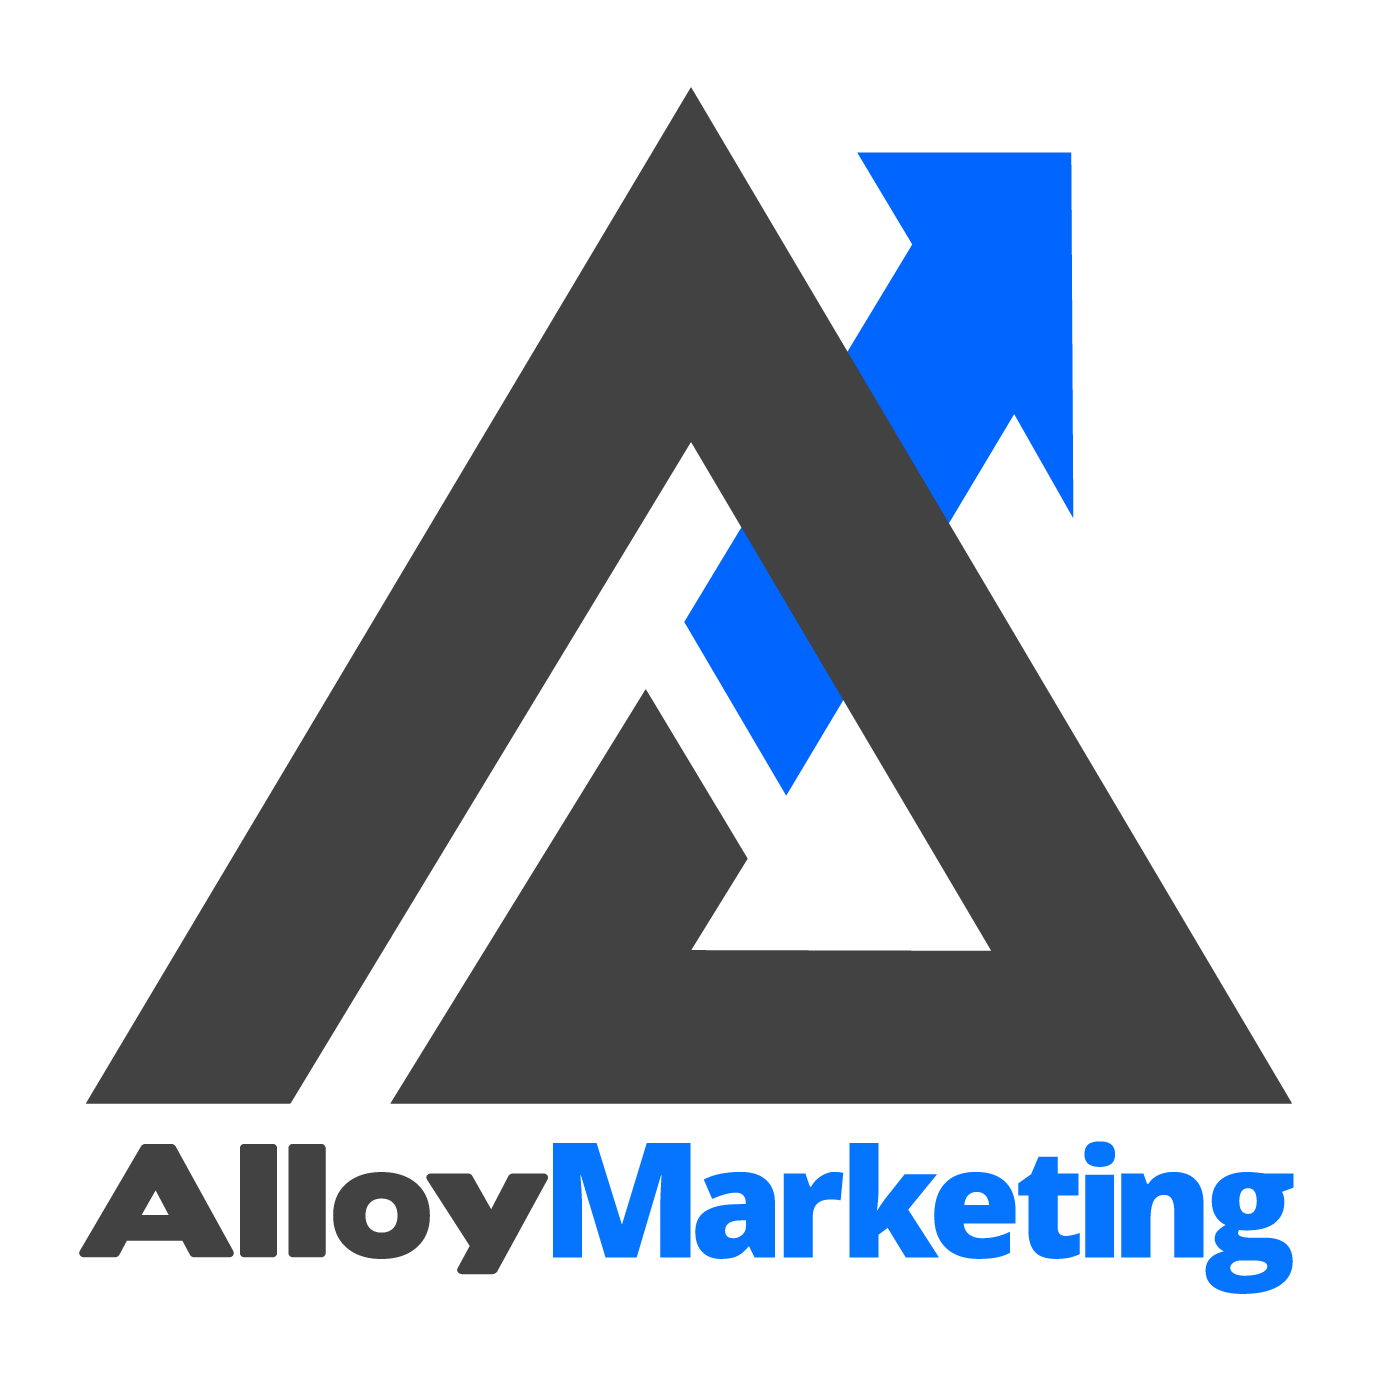 (c) Alloymarketing.co.uk